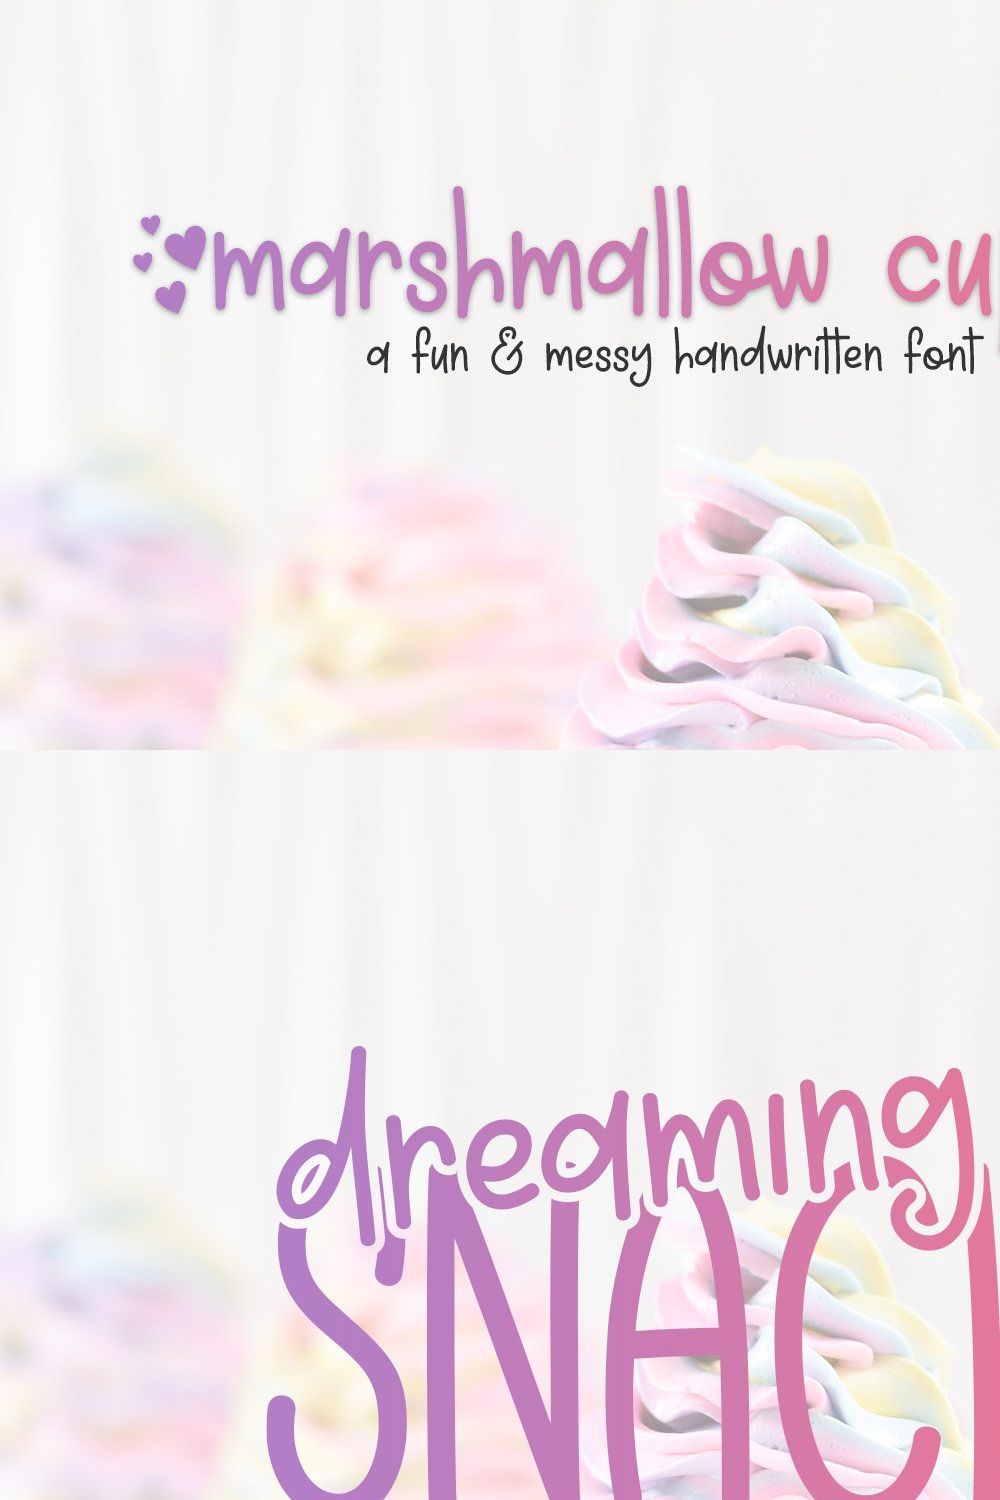 Marshmallow Cupcake pinterest preview image.